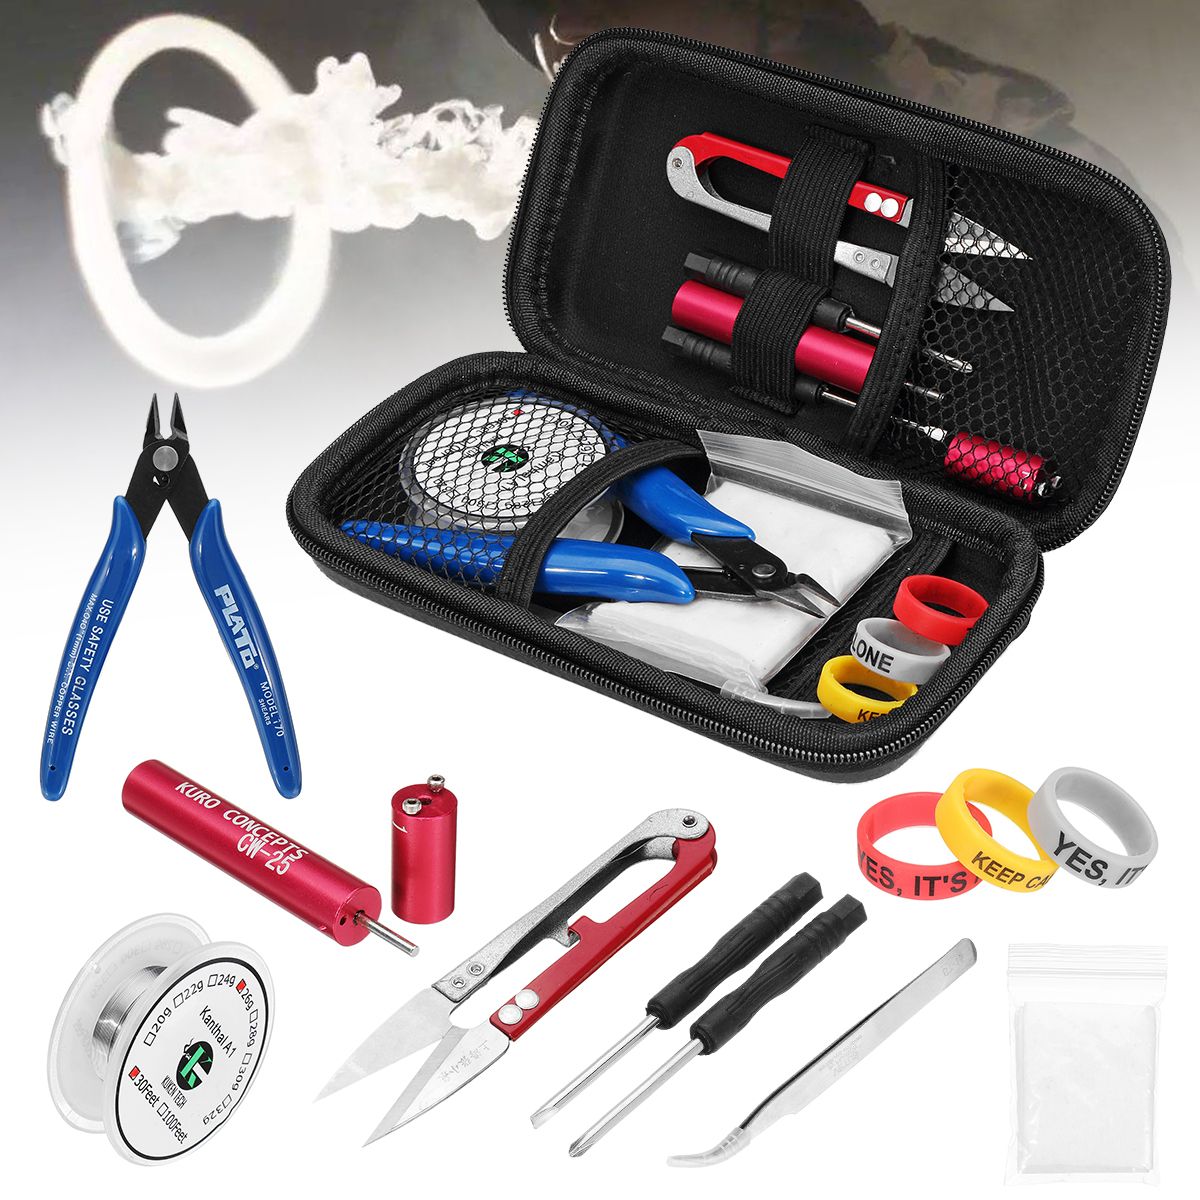 14Pcs-Professional-DIY-RDA-RBA-RTA-Atomizer-Coil-Jig-Tools-Building-Kit-Wire-Cutter-Tweezers-Organic-1307333